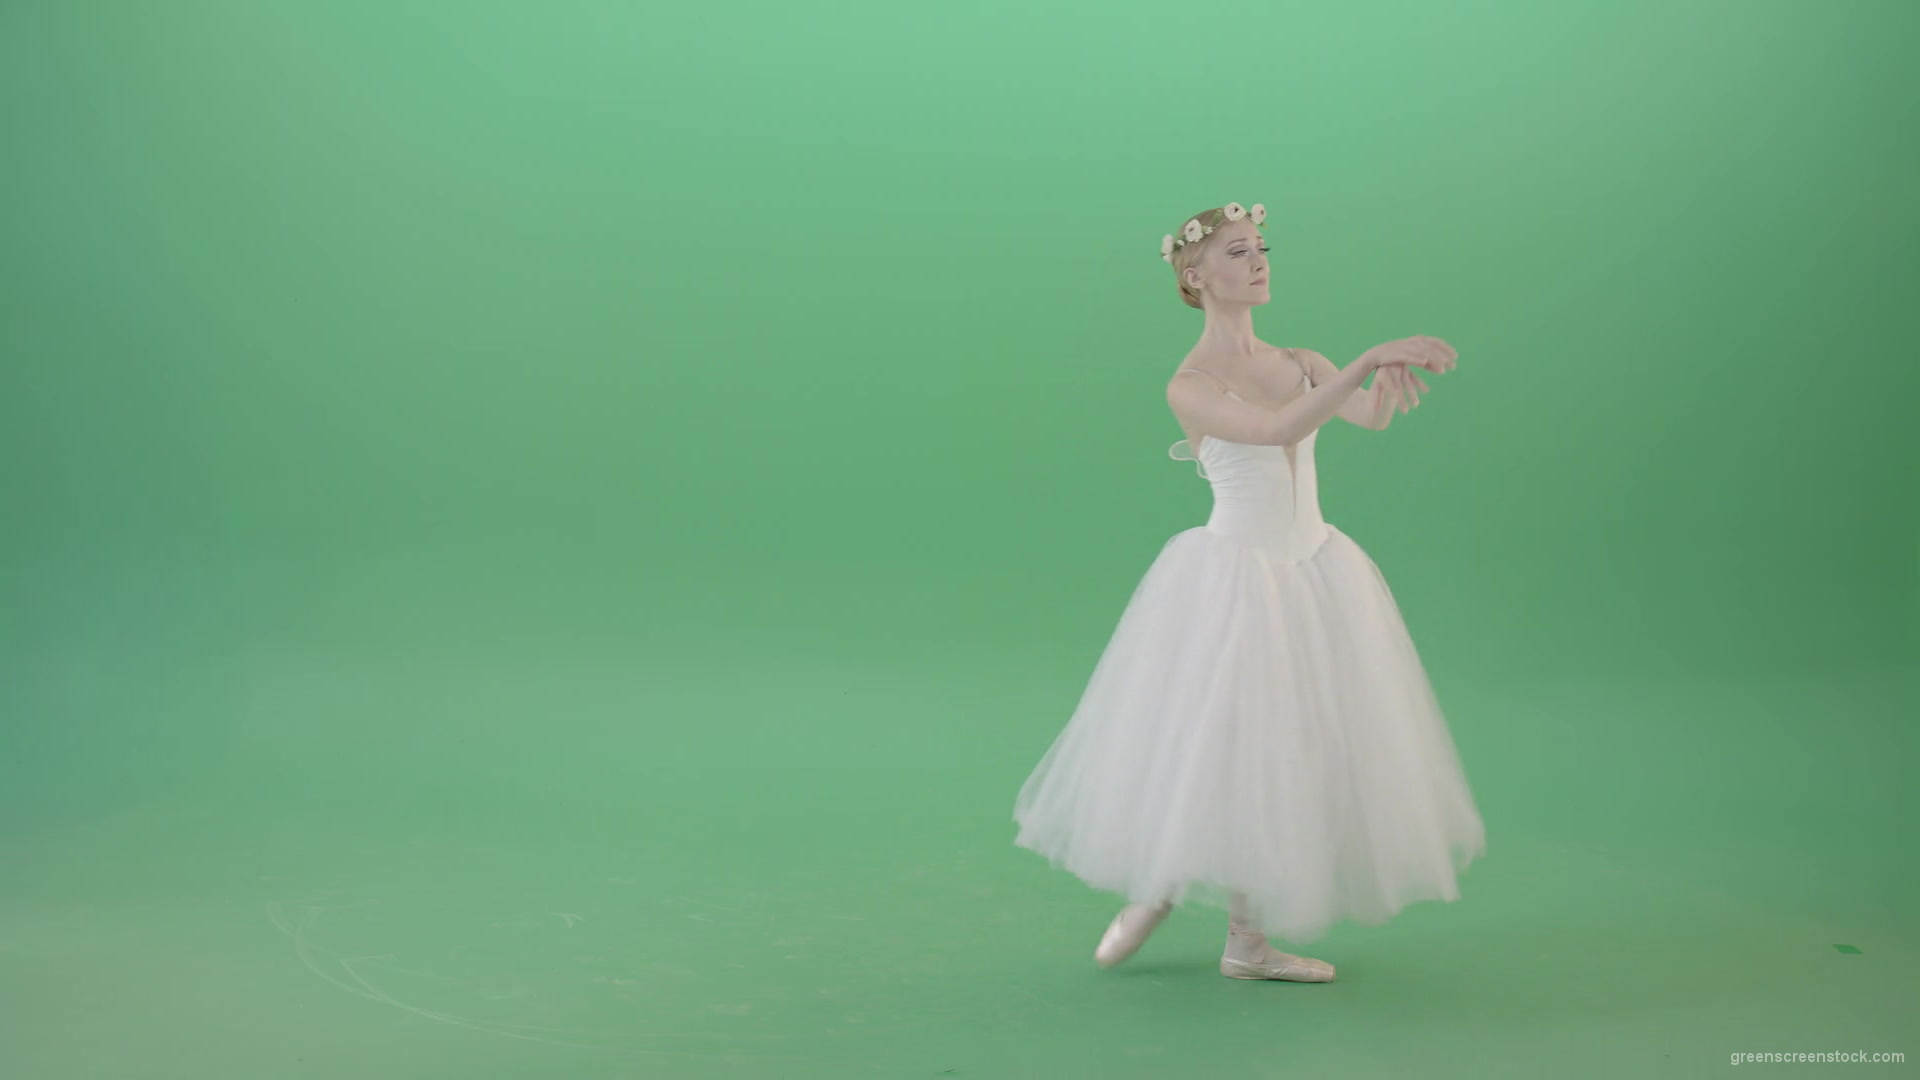 Ballerina-in-elegance-white-wedding-dress-spinning-in-dance-on-green-screen-4K-Video-Footage-1920_009 Green Screen Stock